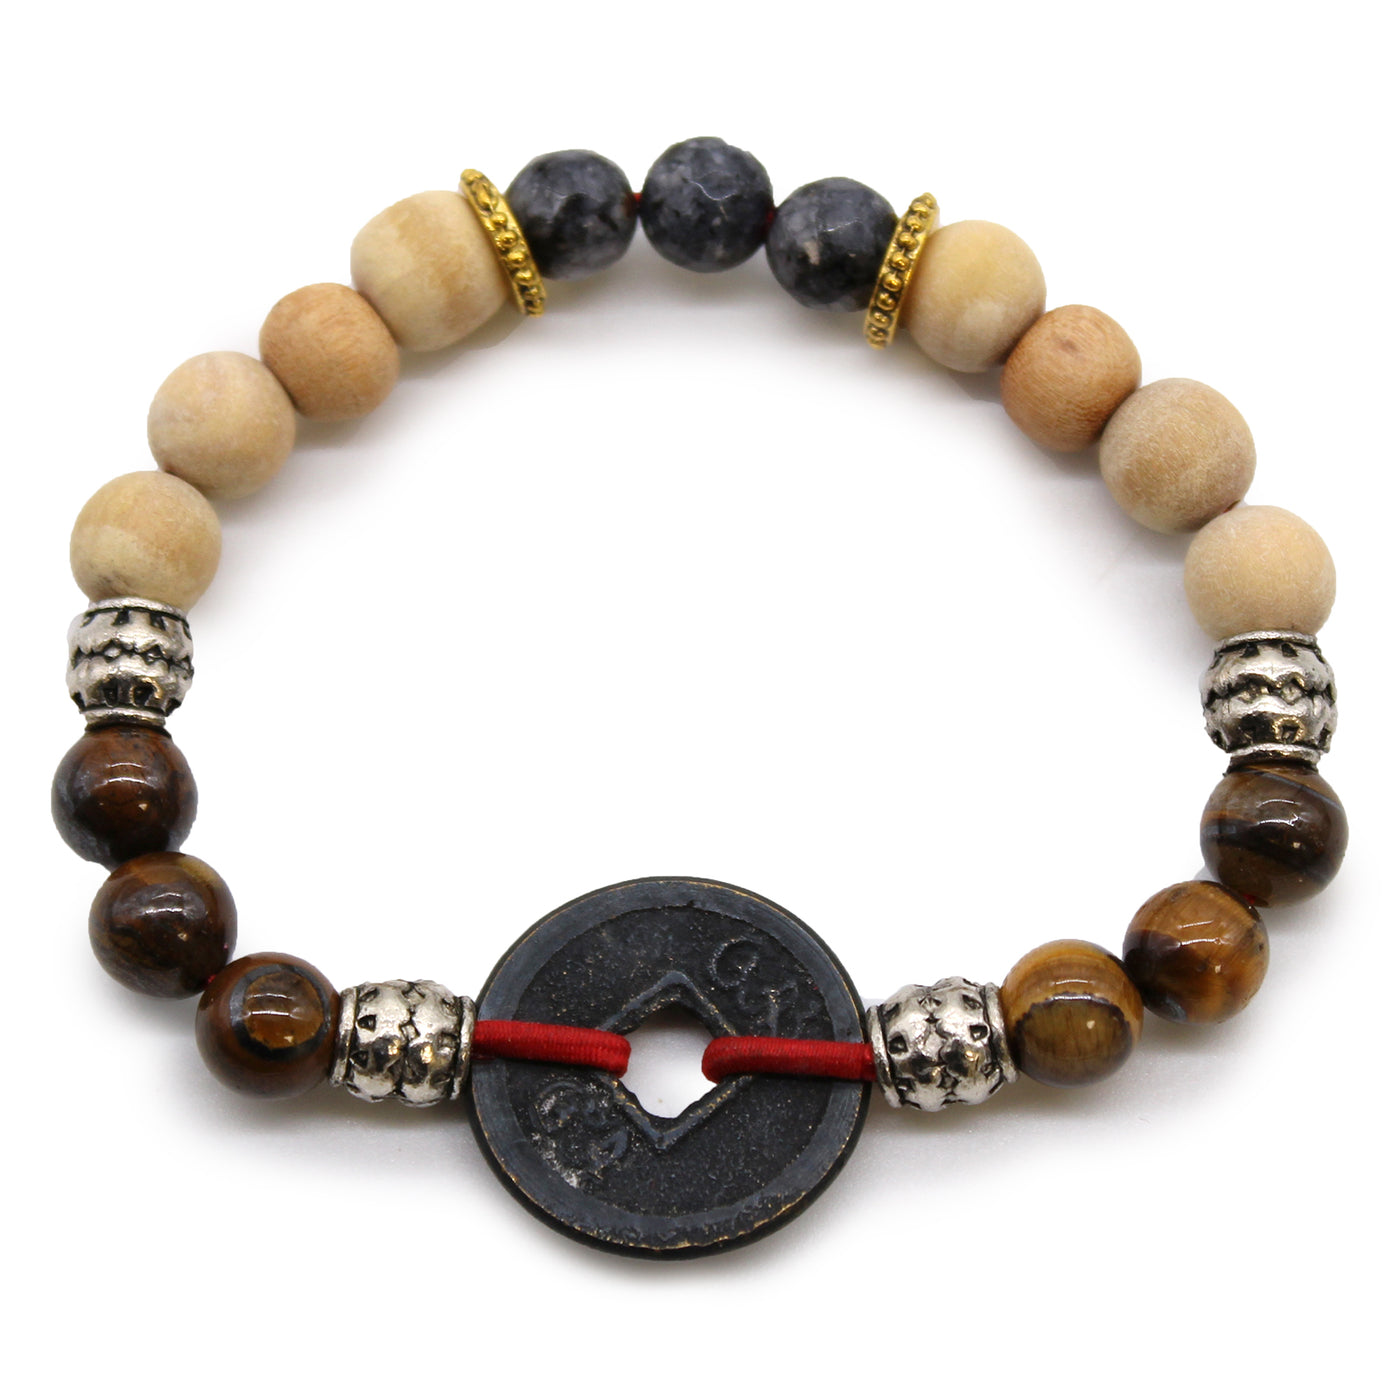 Tri Hita Reincarnation Women's Bracelet With Stone Glass & Wooden Beads